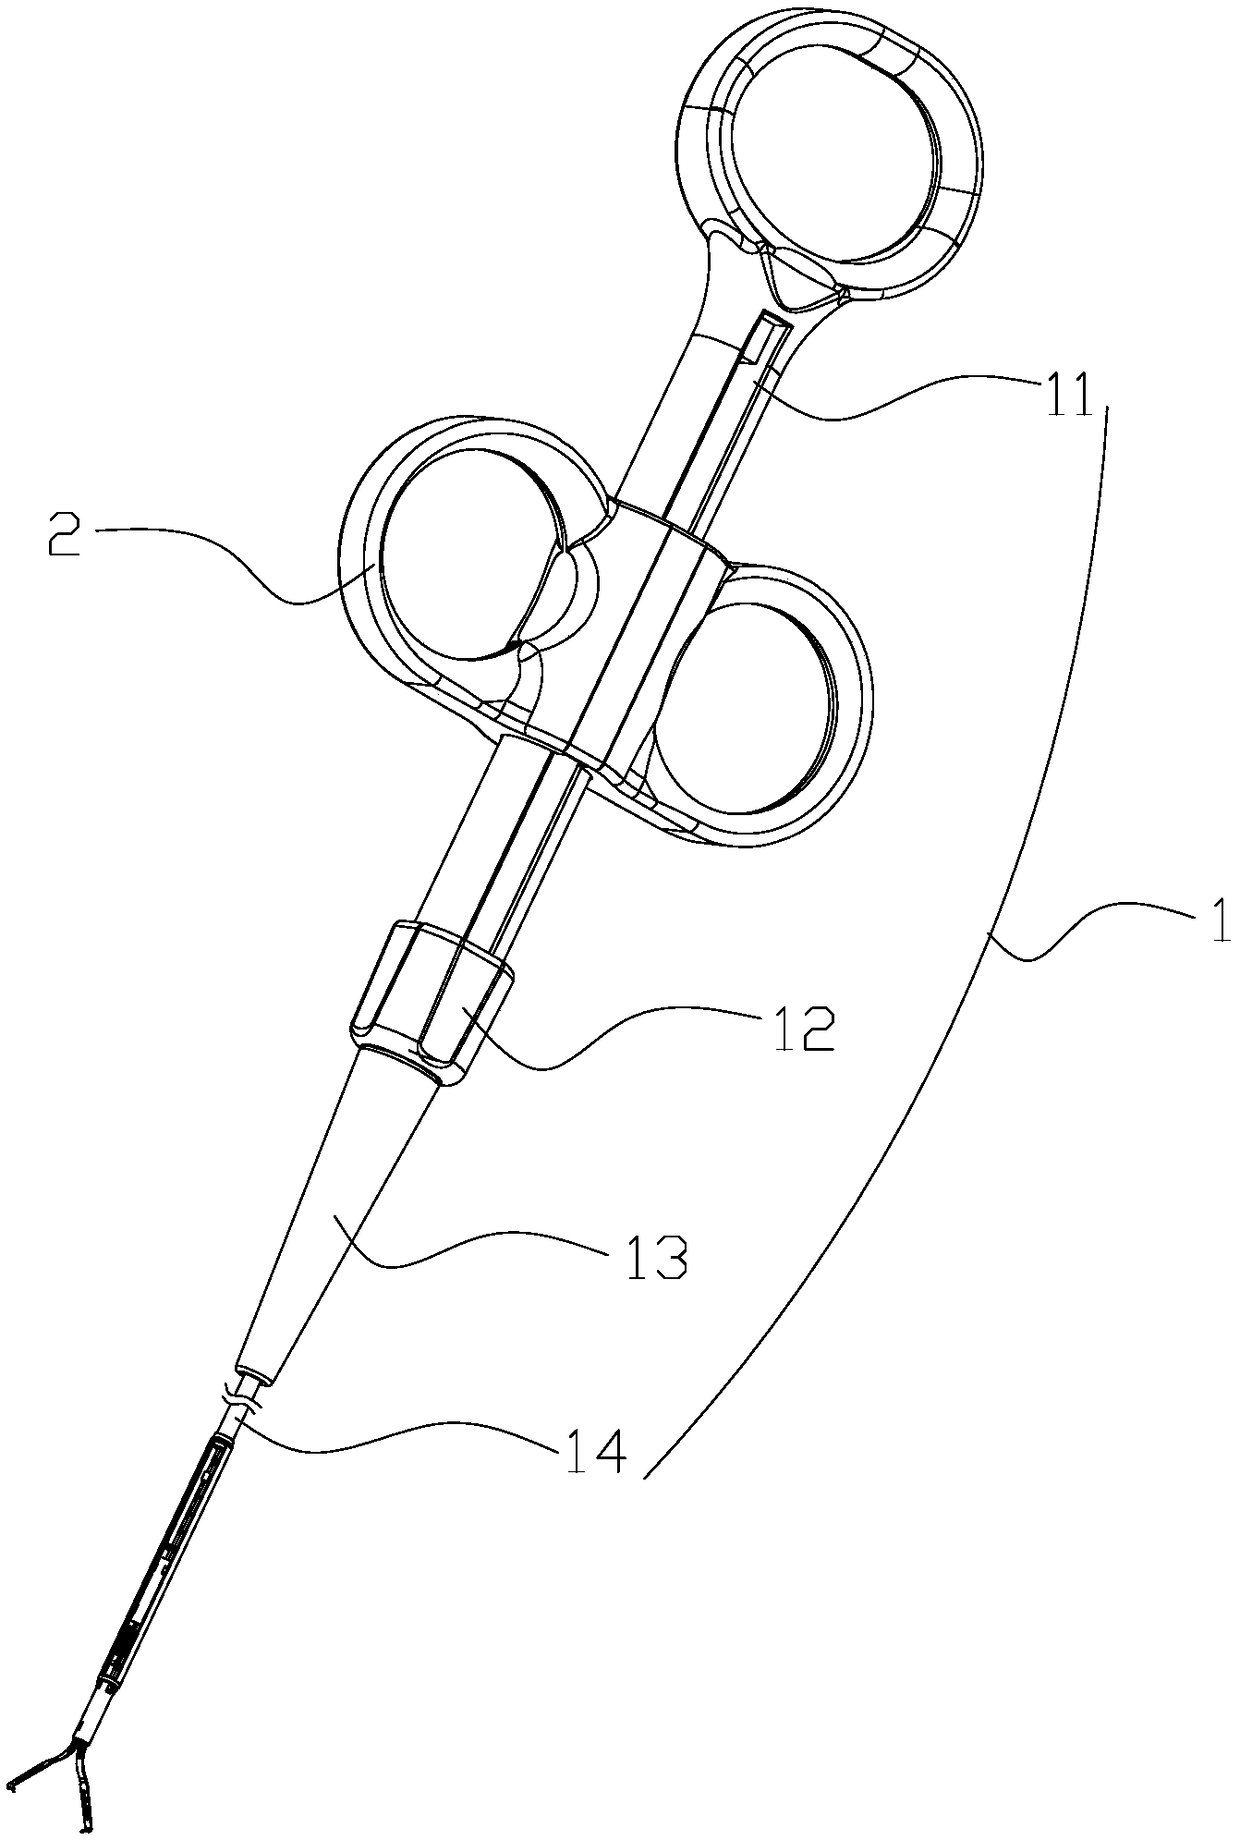 Multi-shooting tissue clamp